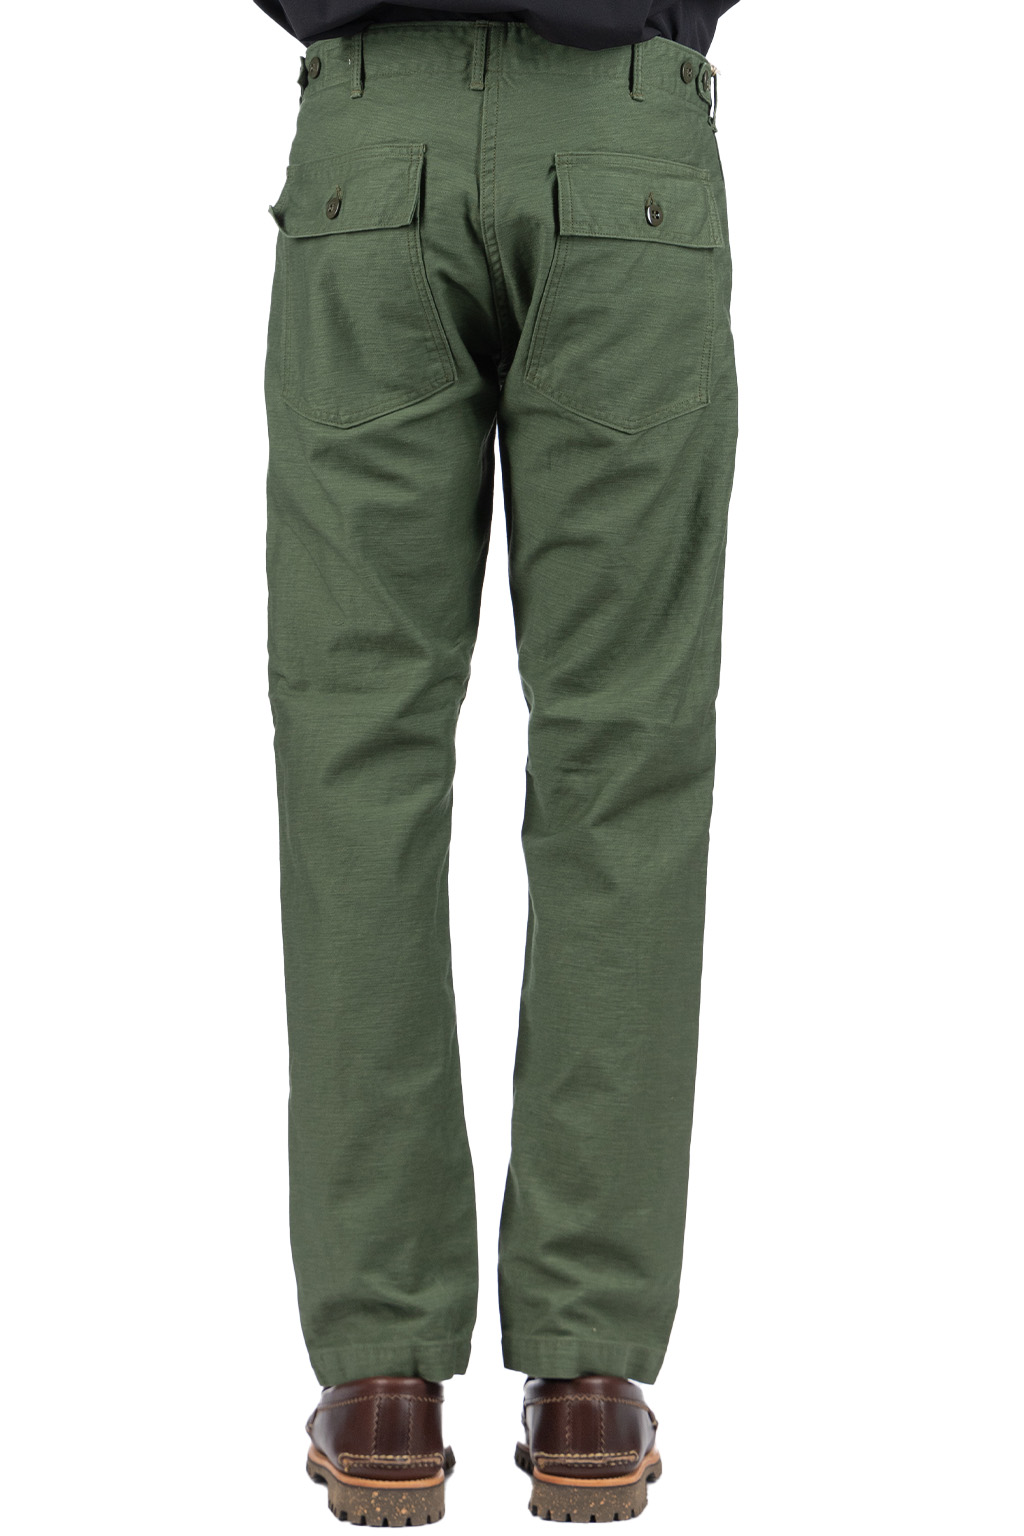 Orslow Slim Fit Fatigue Pants Green 16 - Made in Japan, Pants